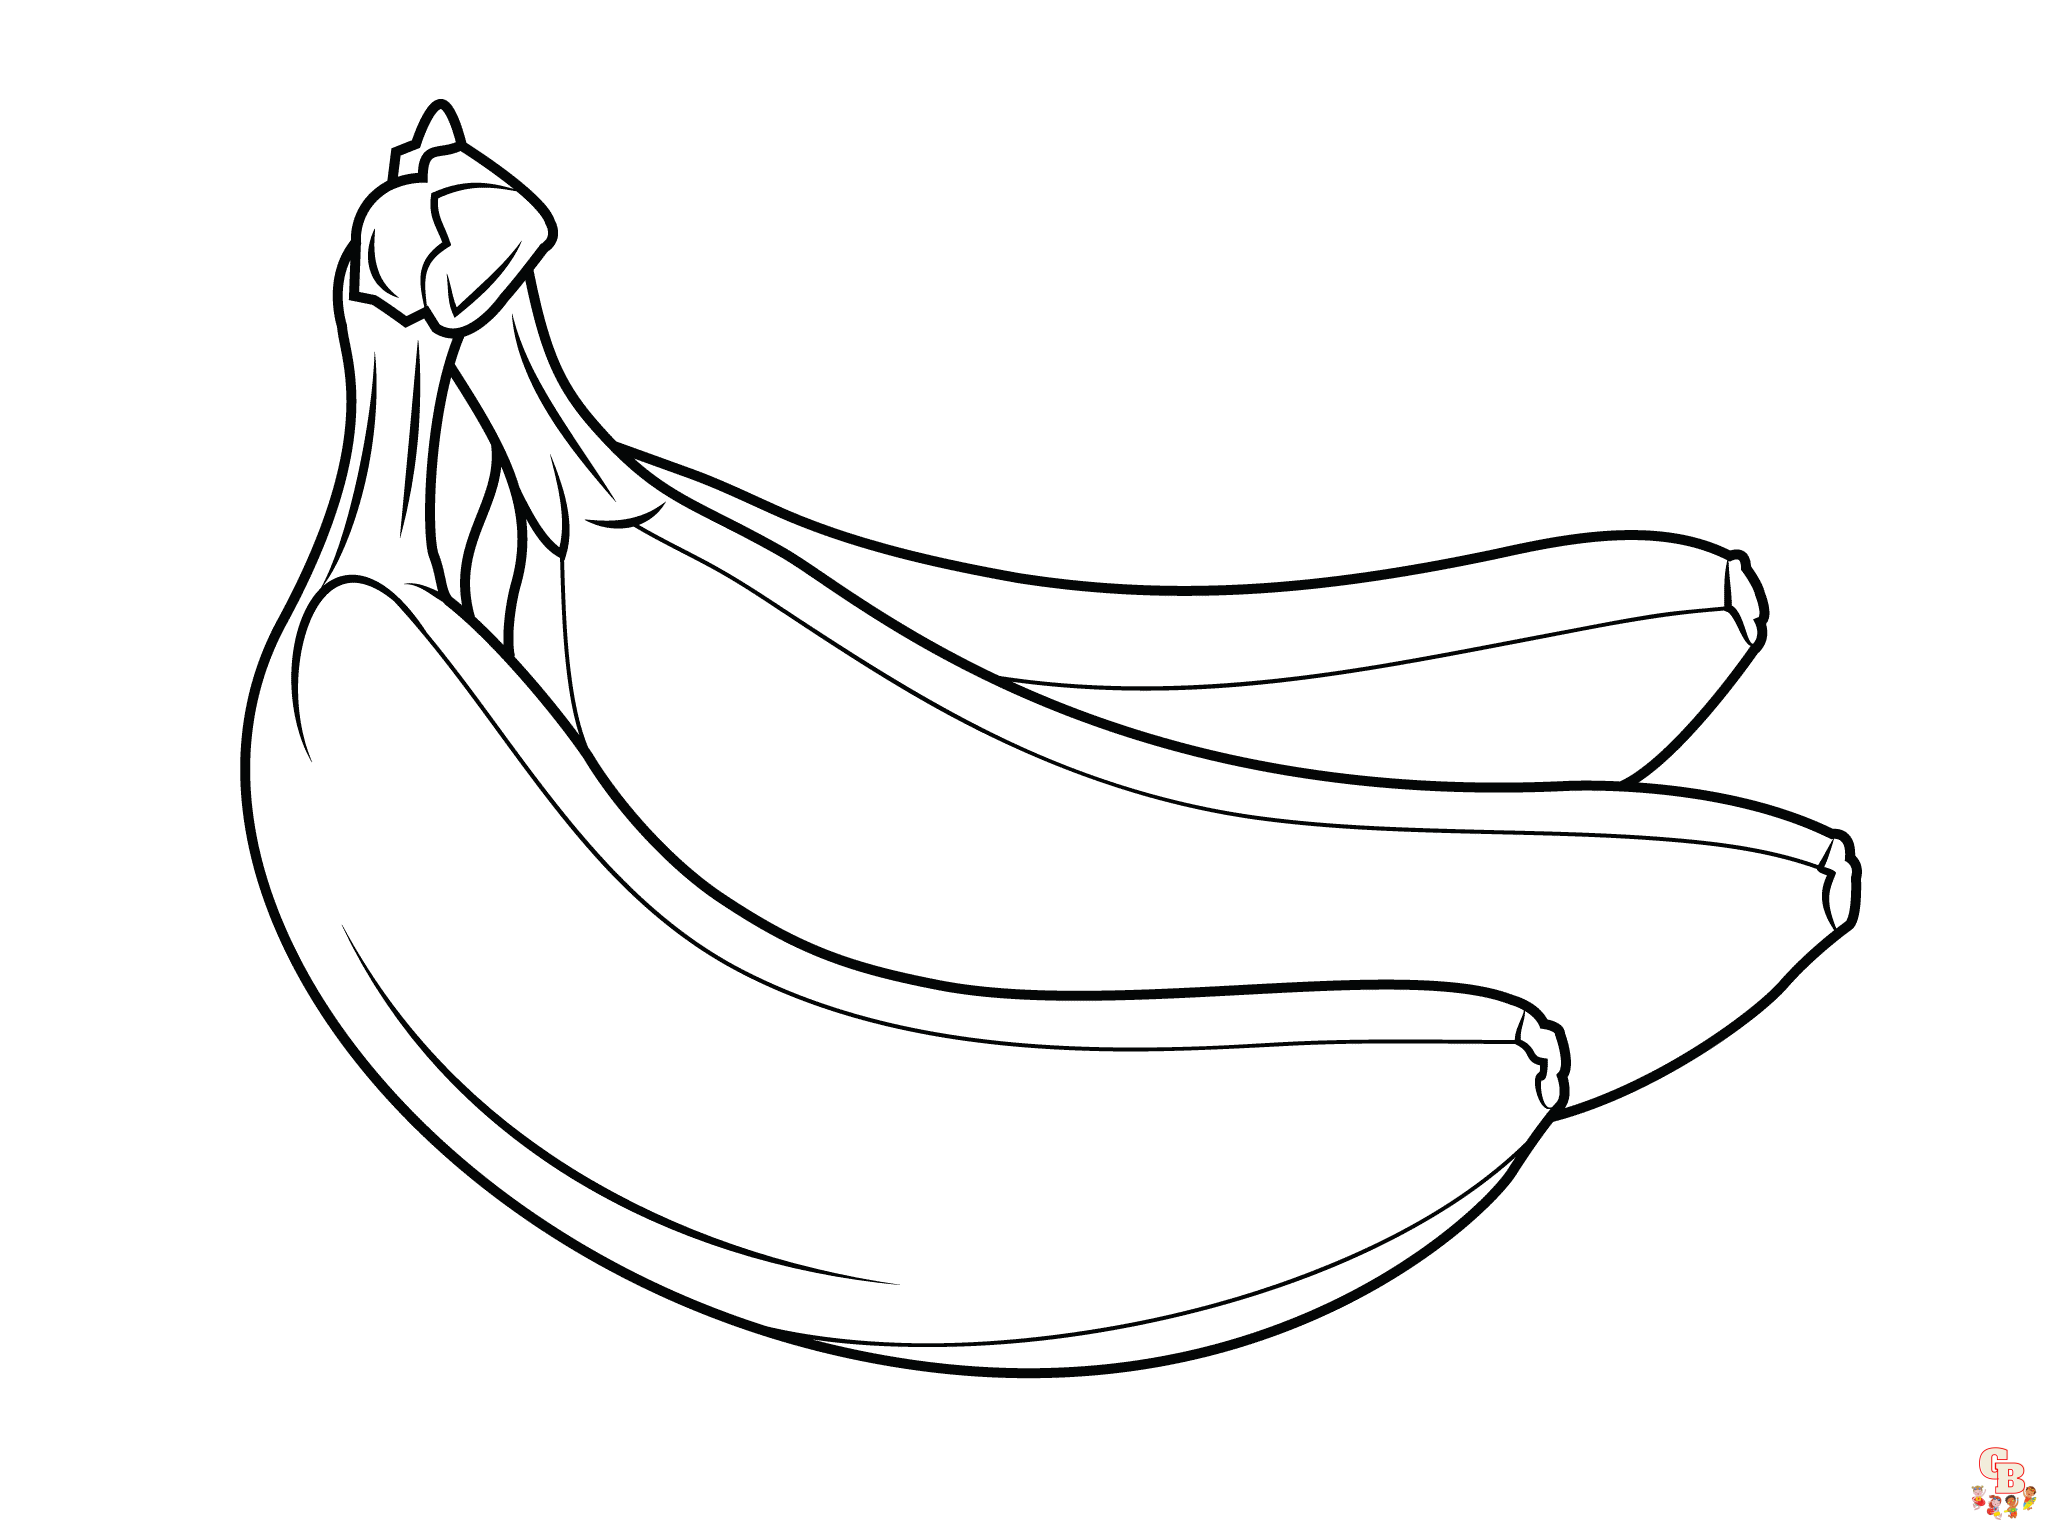 Banana Coloring Pages 1